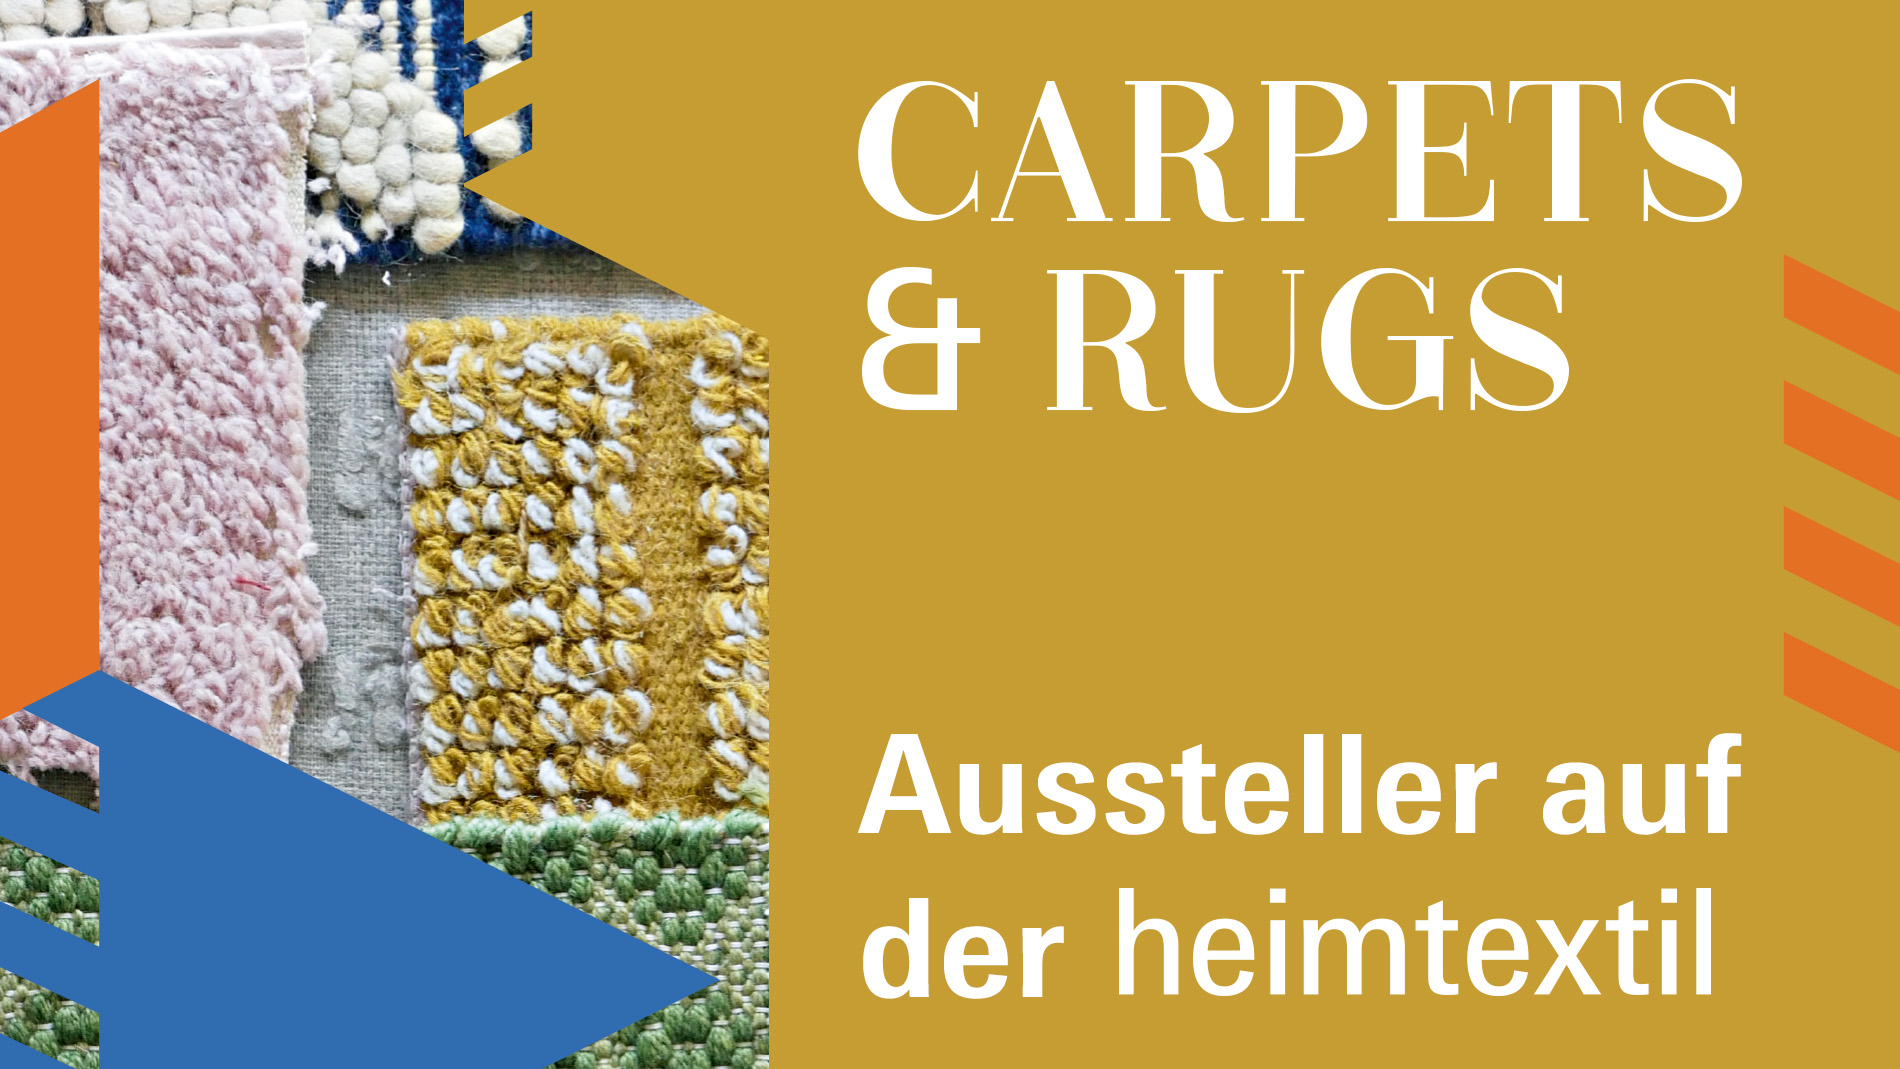 Carpets & rugs